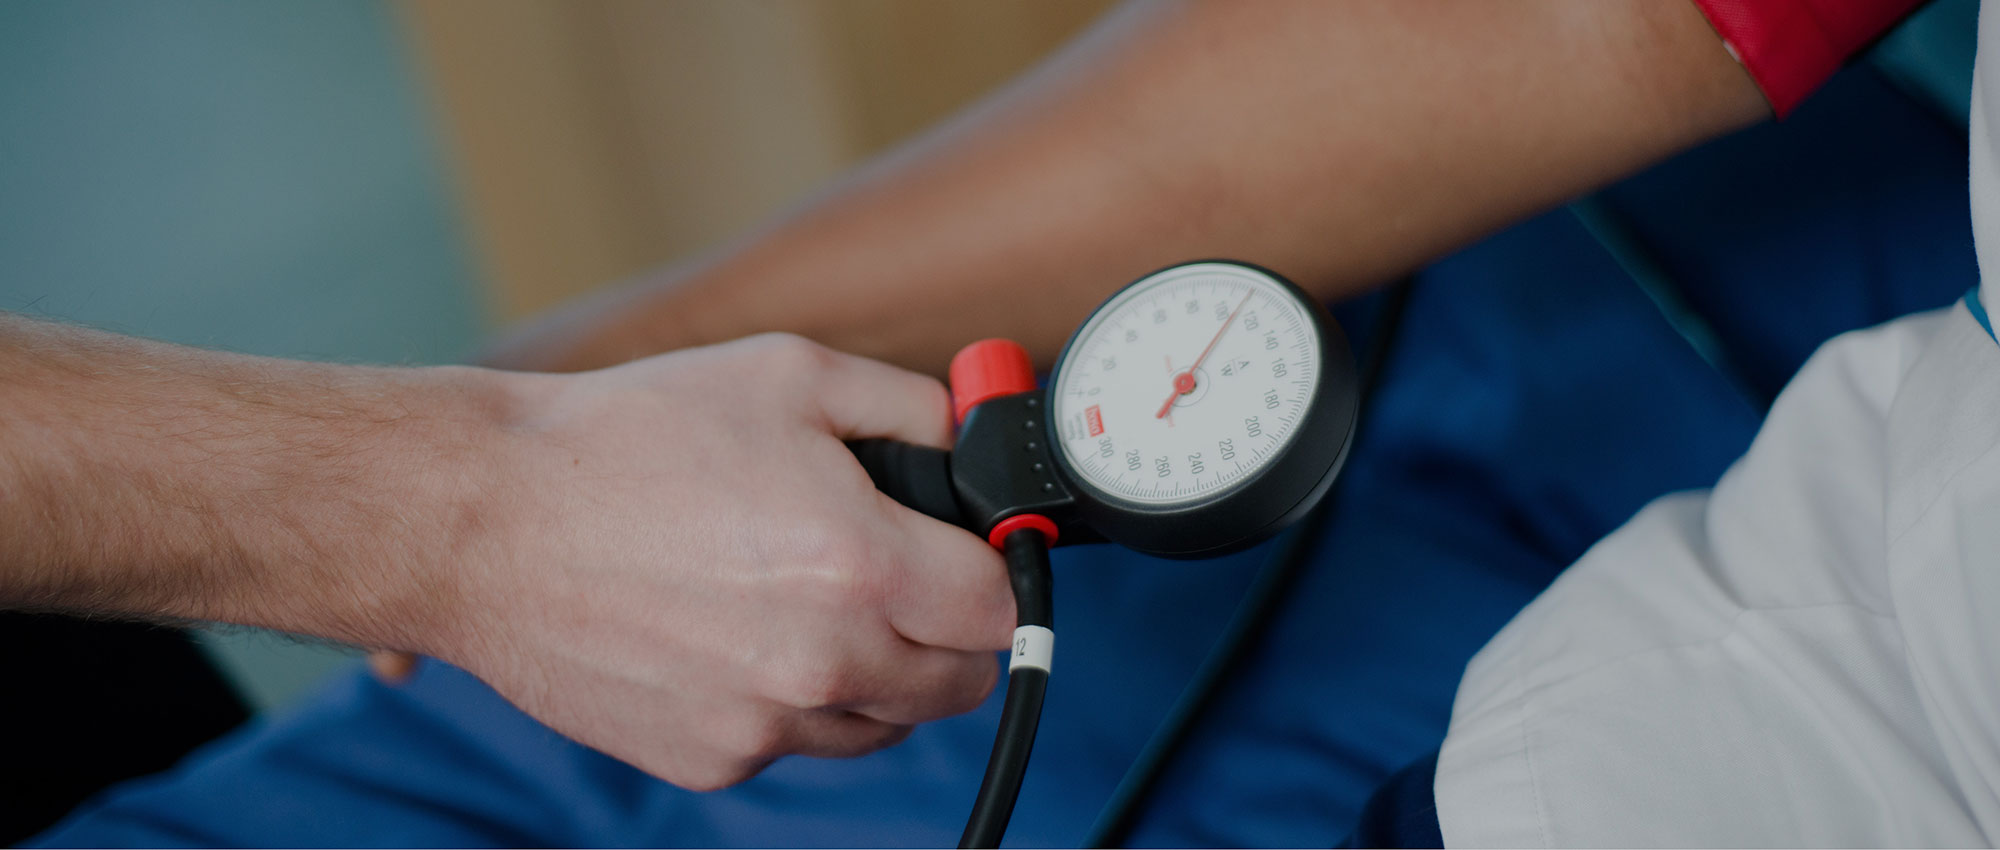 A healthcare professional measures a patient's blood pressure using a sphygmomanometer.